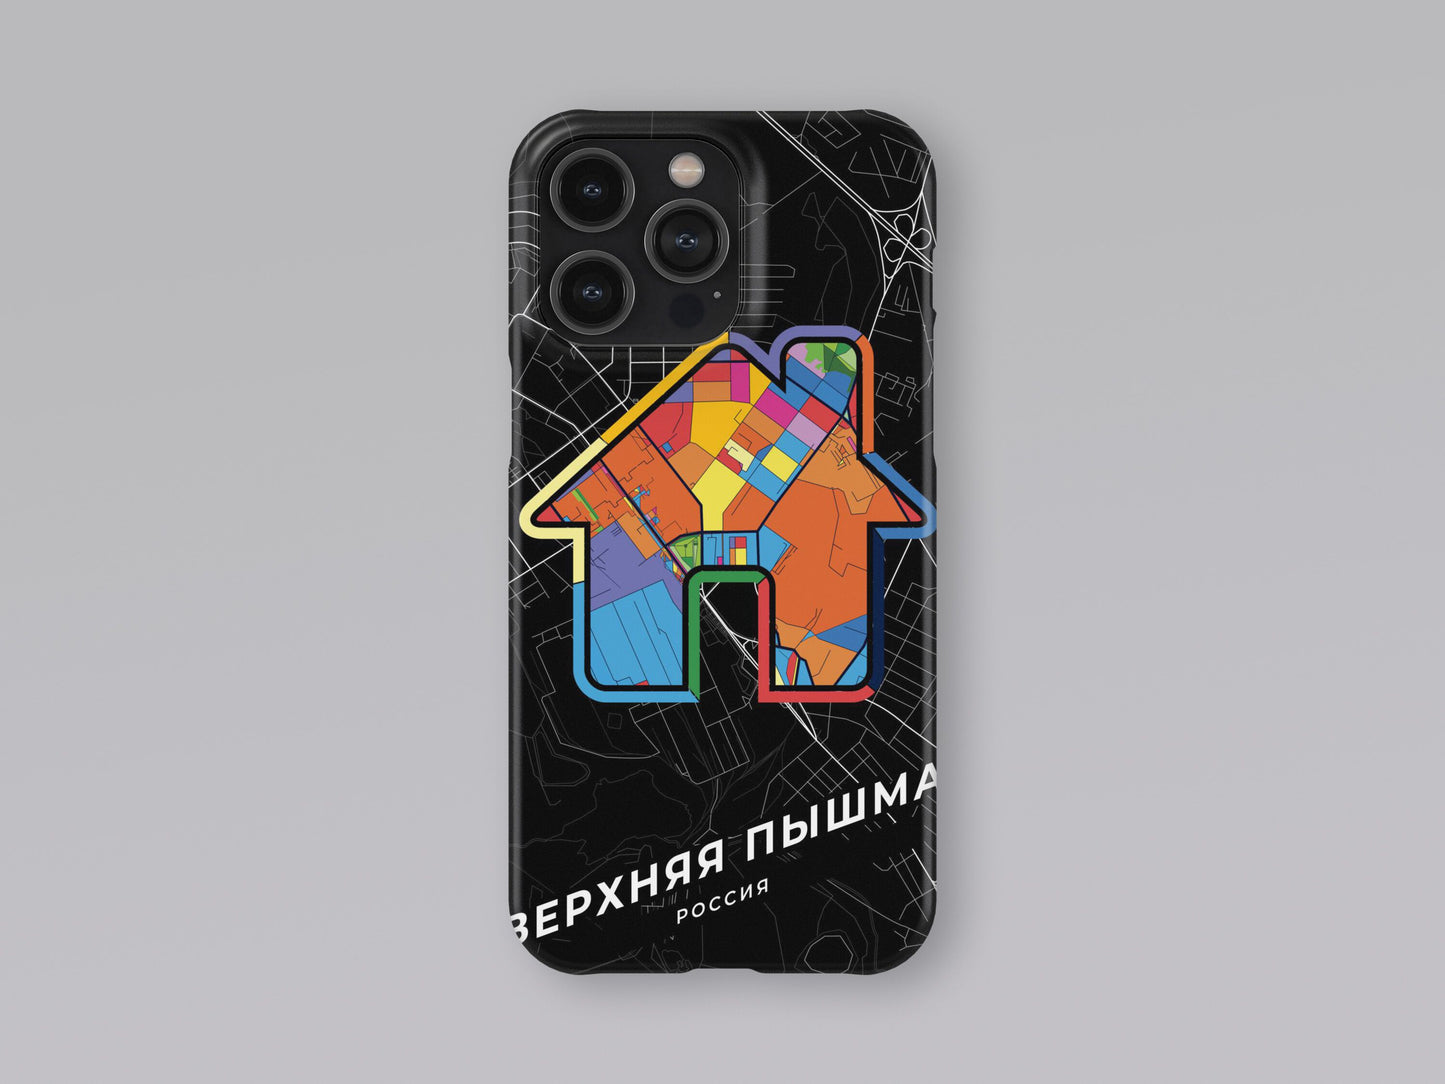 Verkhnyaya Pyshma Russia slim phone case with colorful icon 3